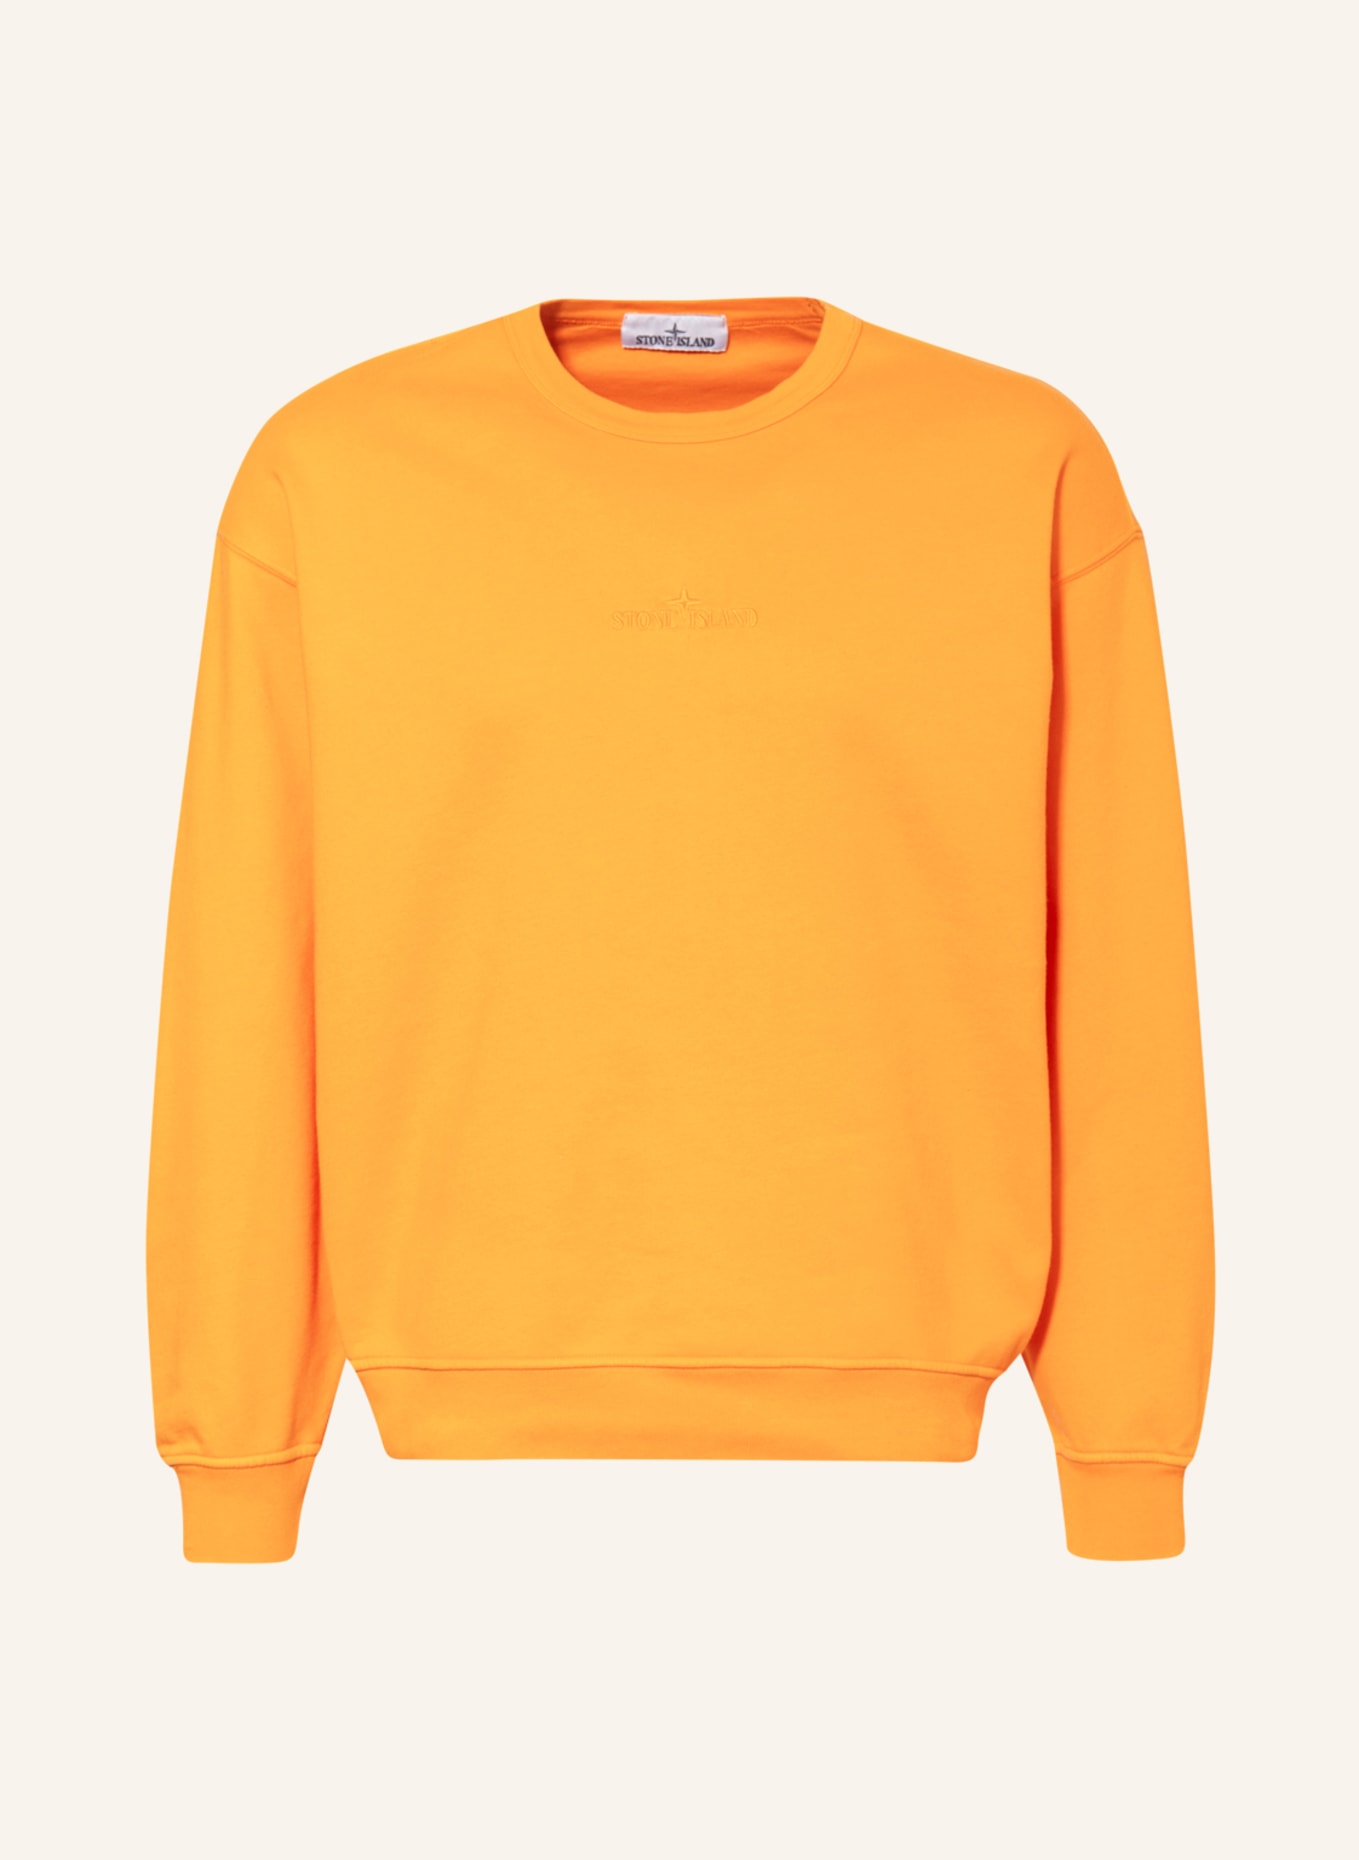 STONE ISLAND Sweatshirt, Farbe: ORANGE (Bild 1)